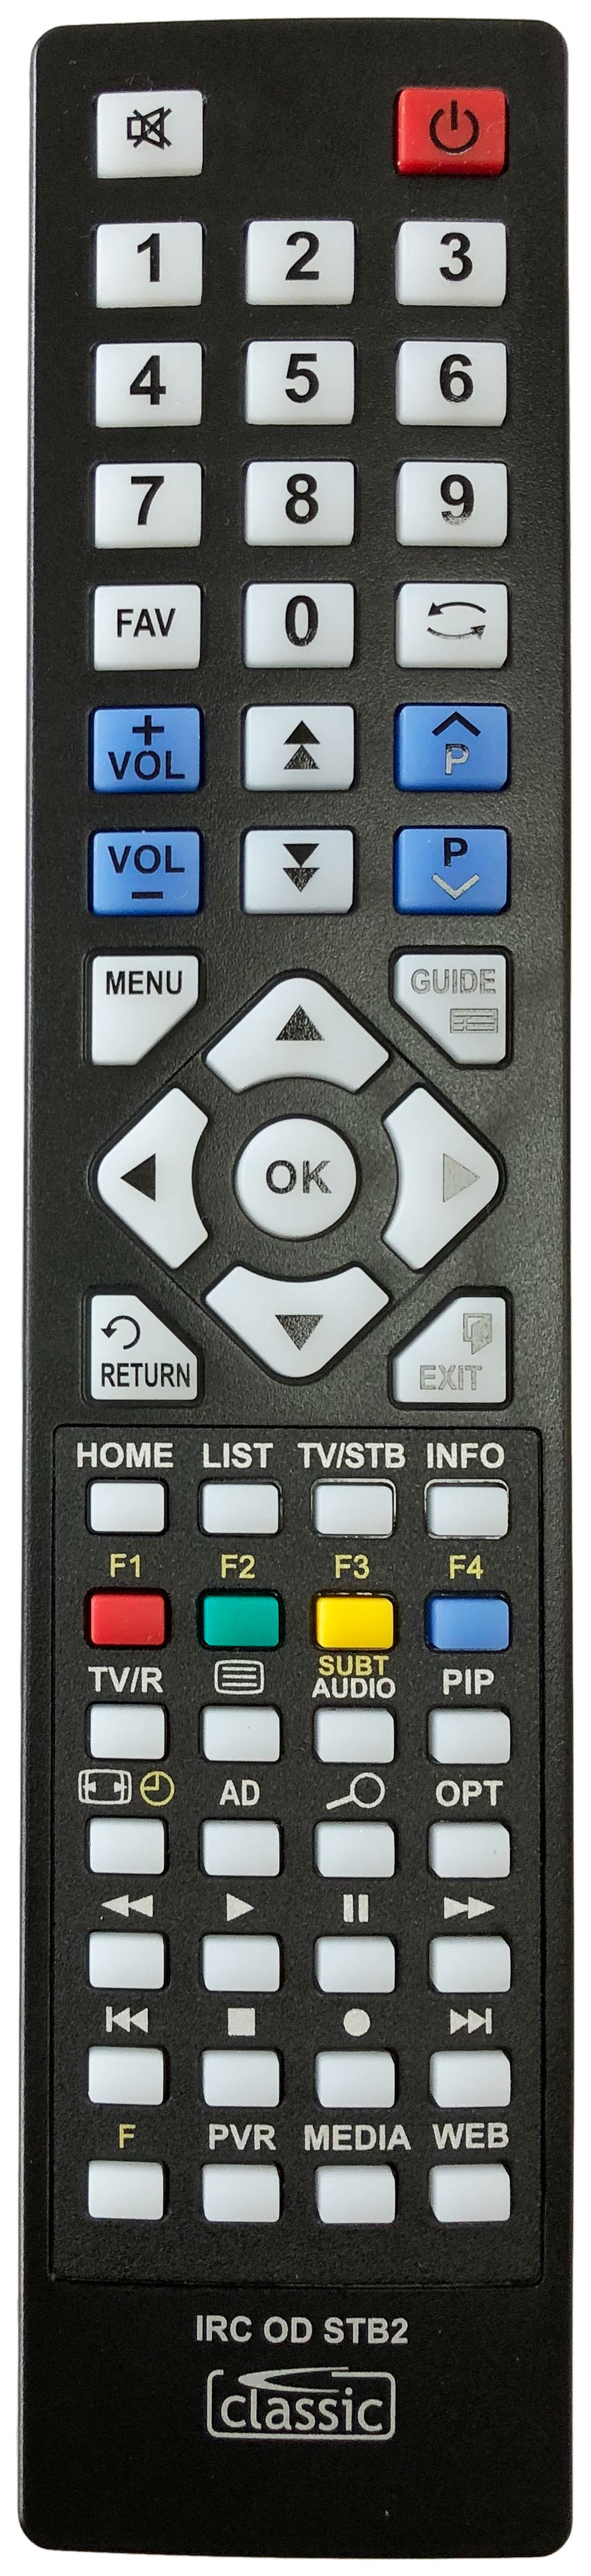 Triax RG414-S Remote Control Alternative